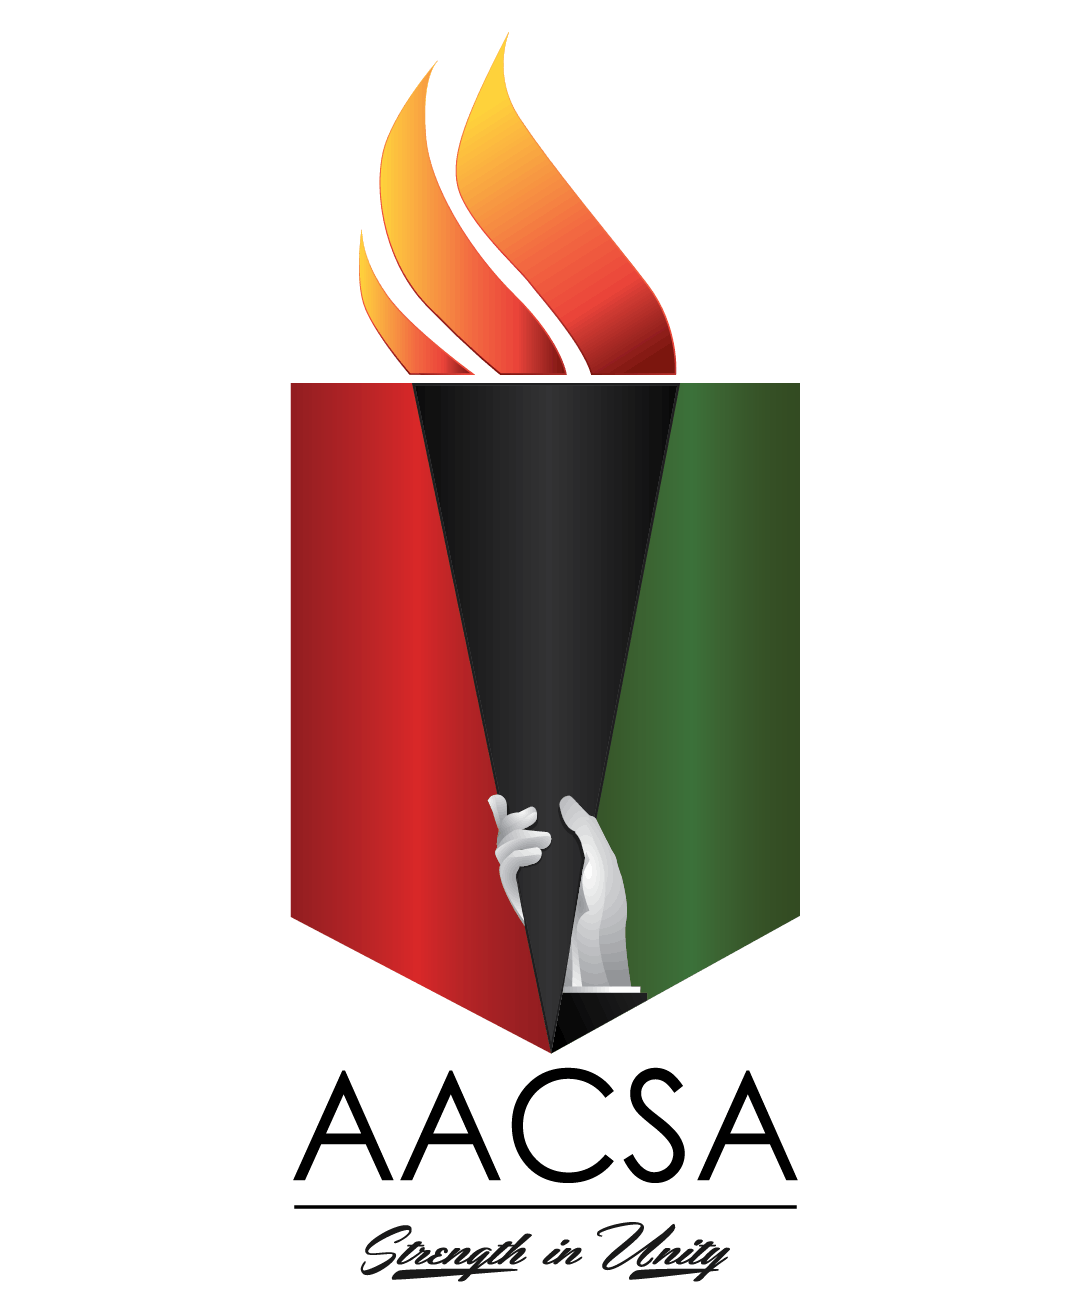 African American Community Service Agency logo